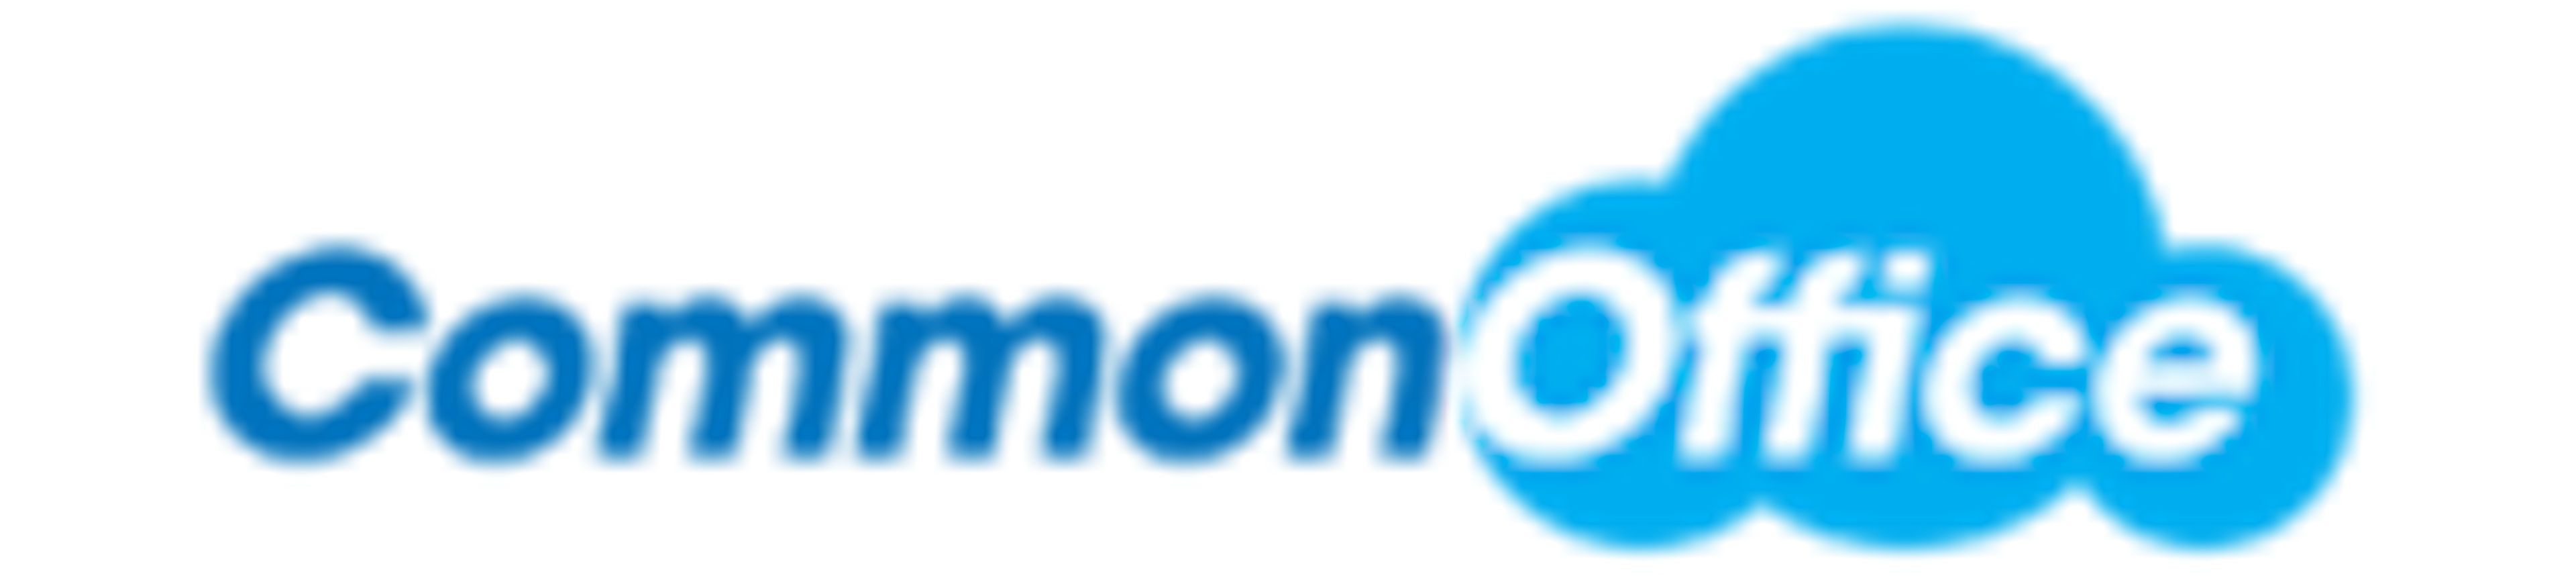 CommonOffice HRIS Logo